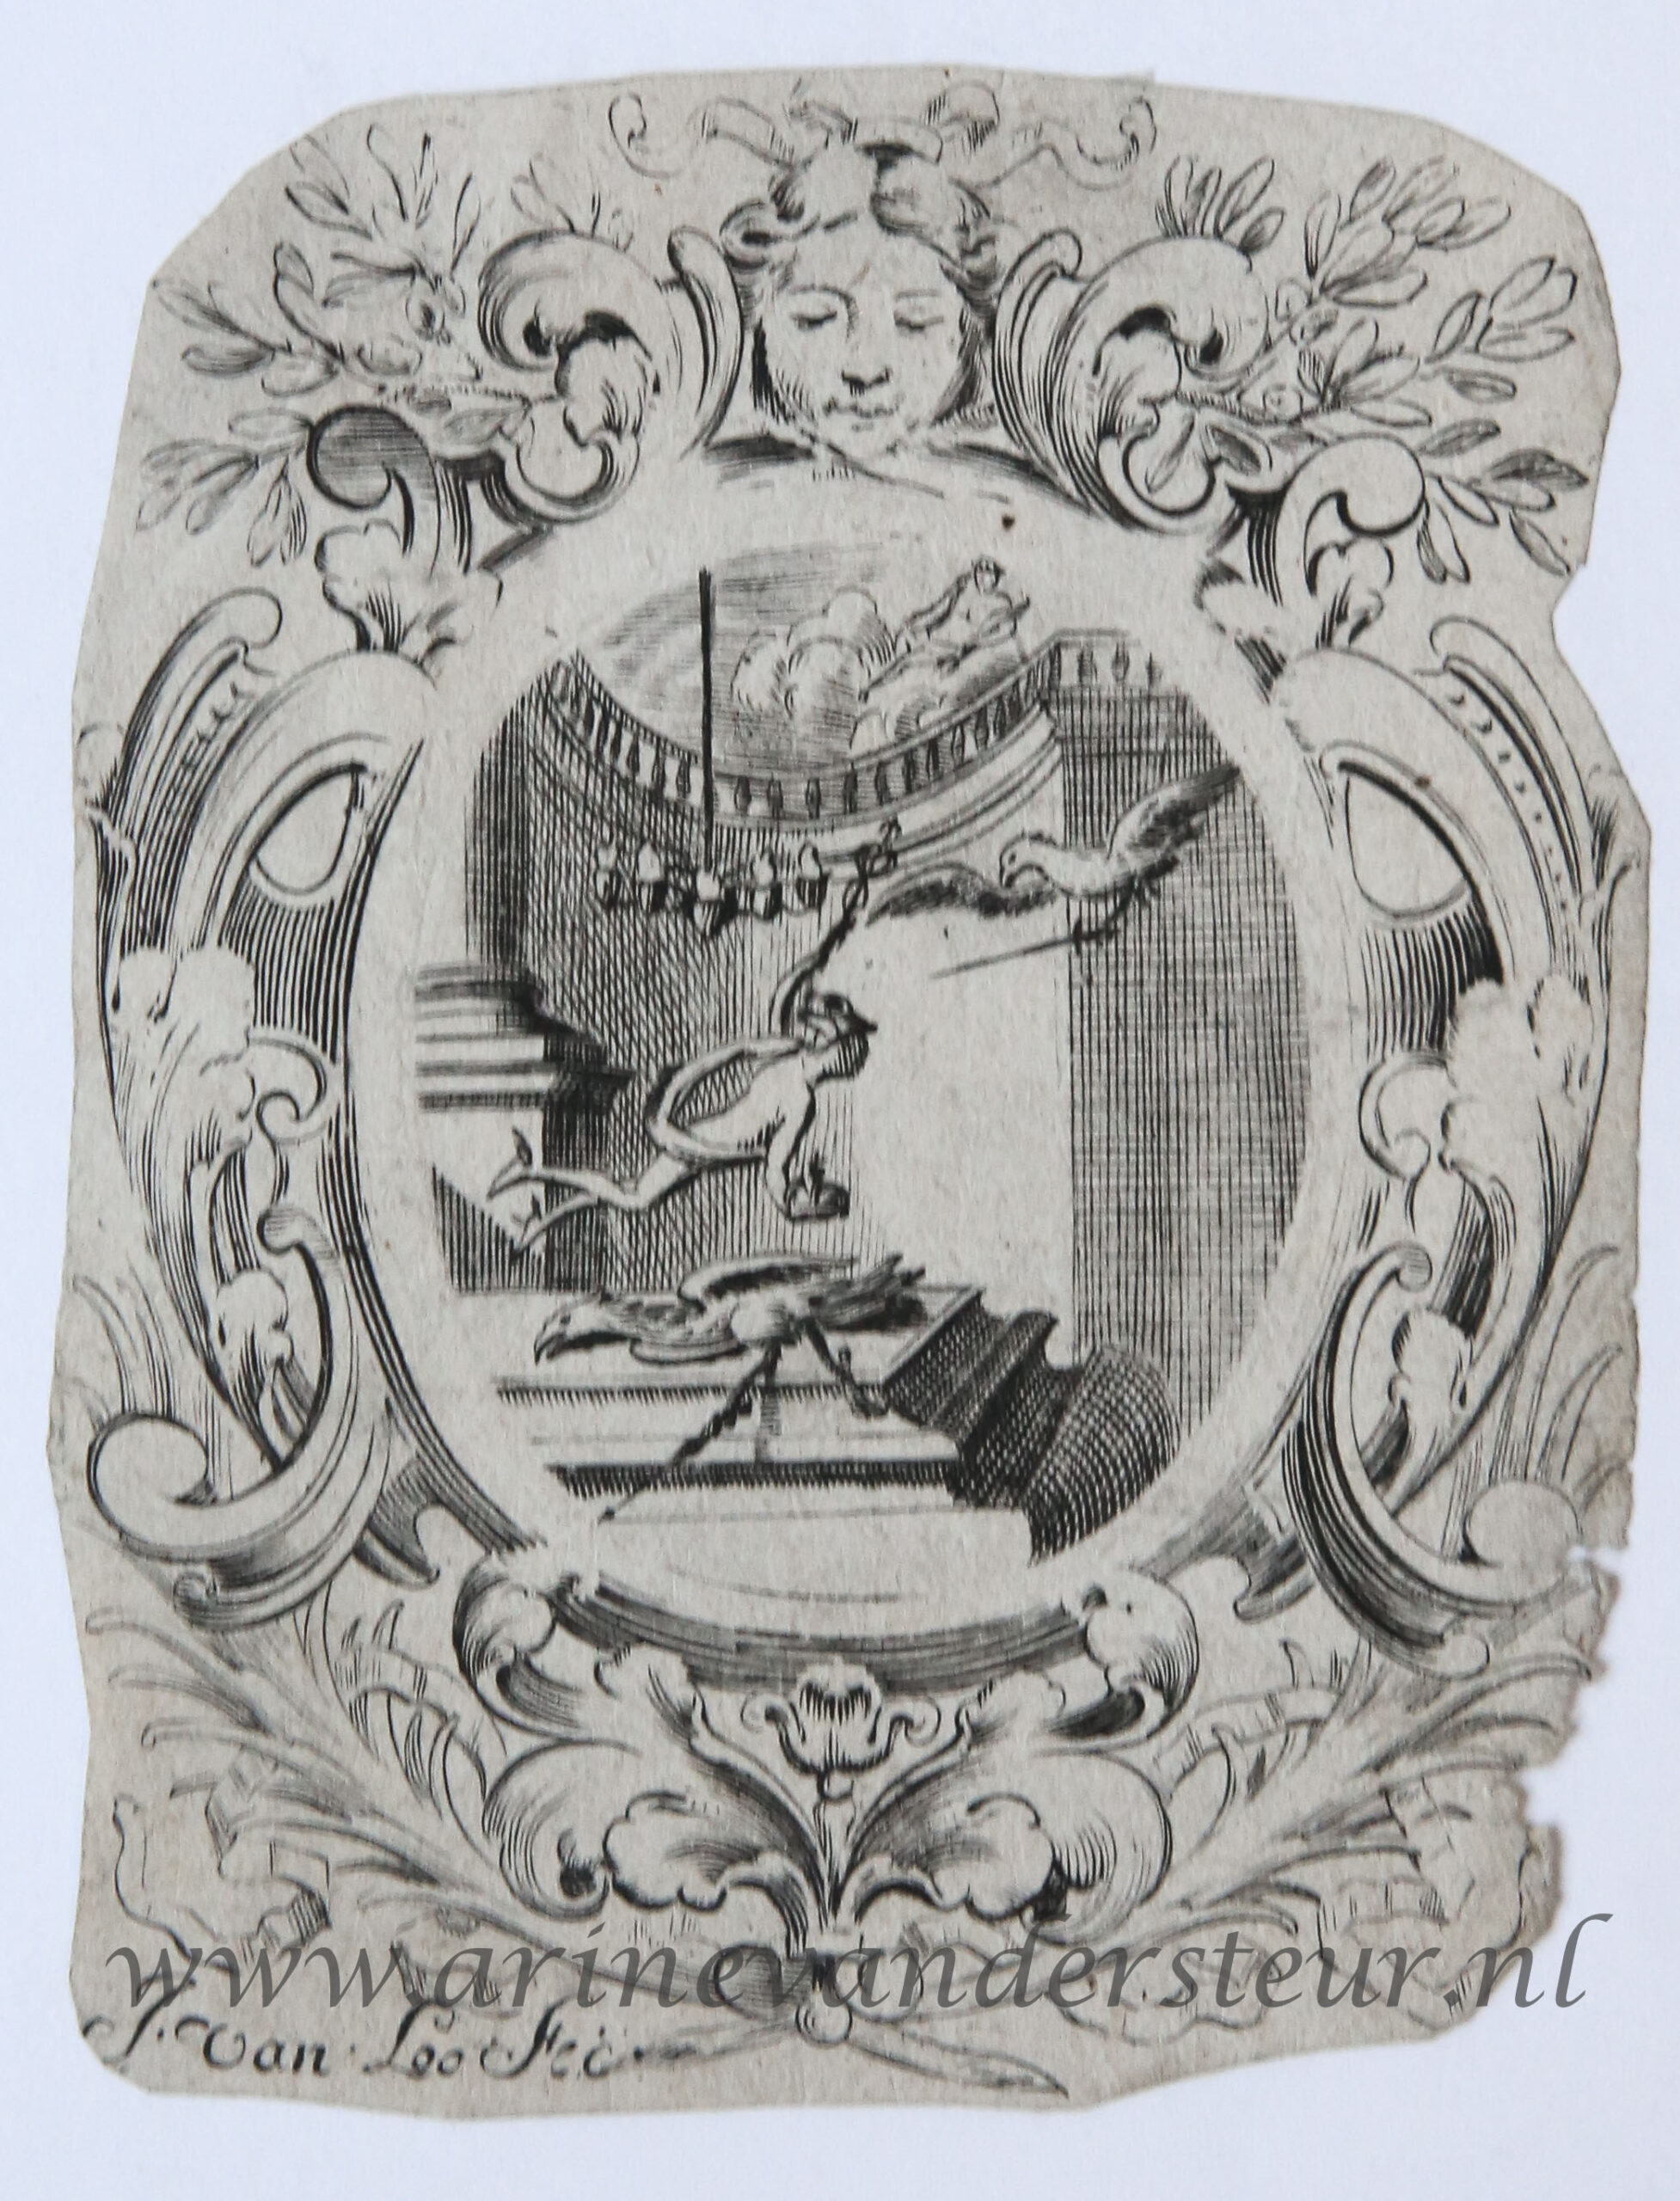 [Original etchings] Ornament prints/Decoratieve ornament prenten met vogels etc., ca 1600-1650.